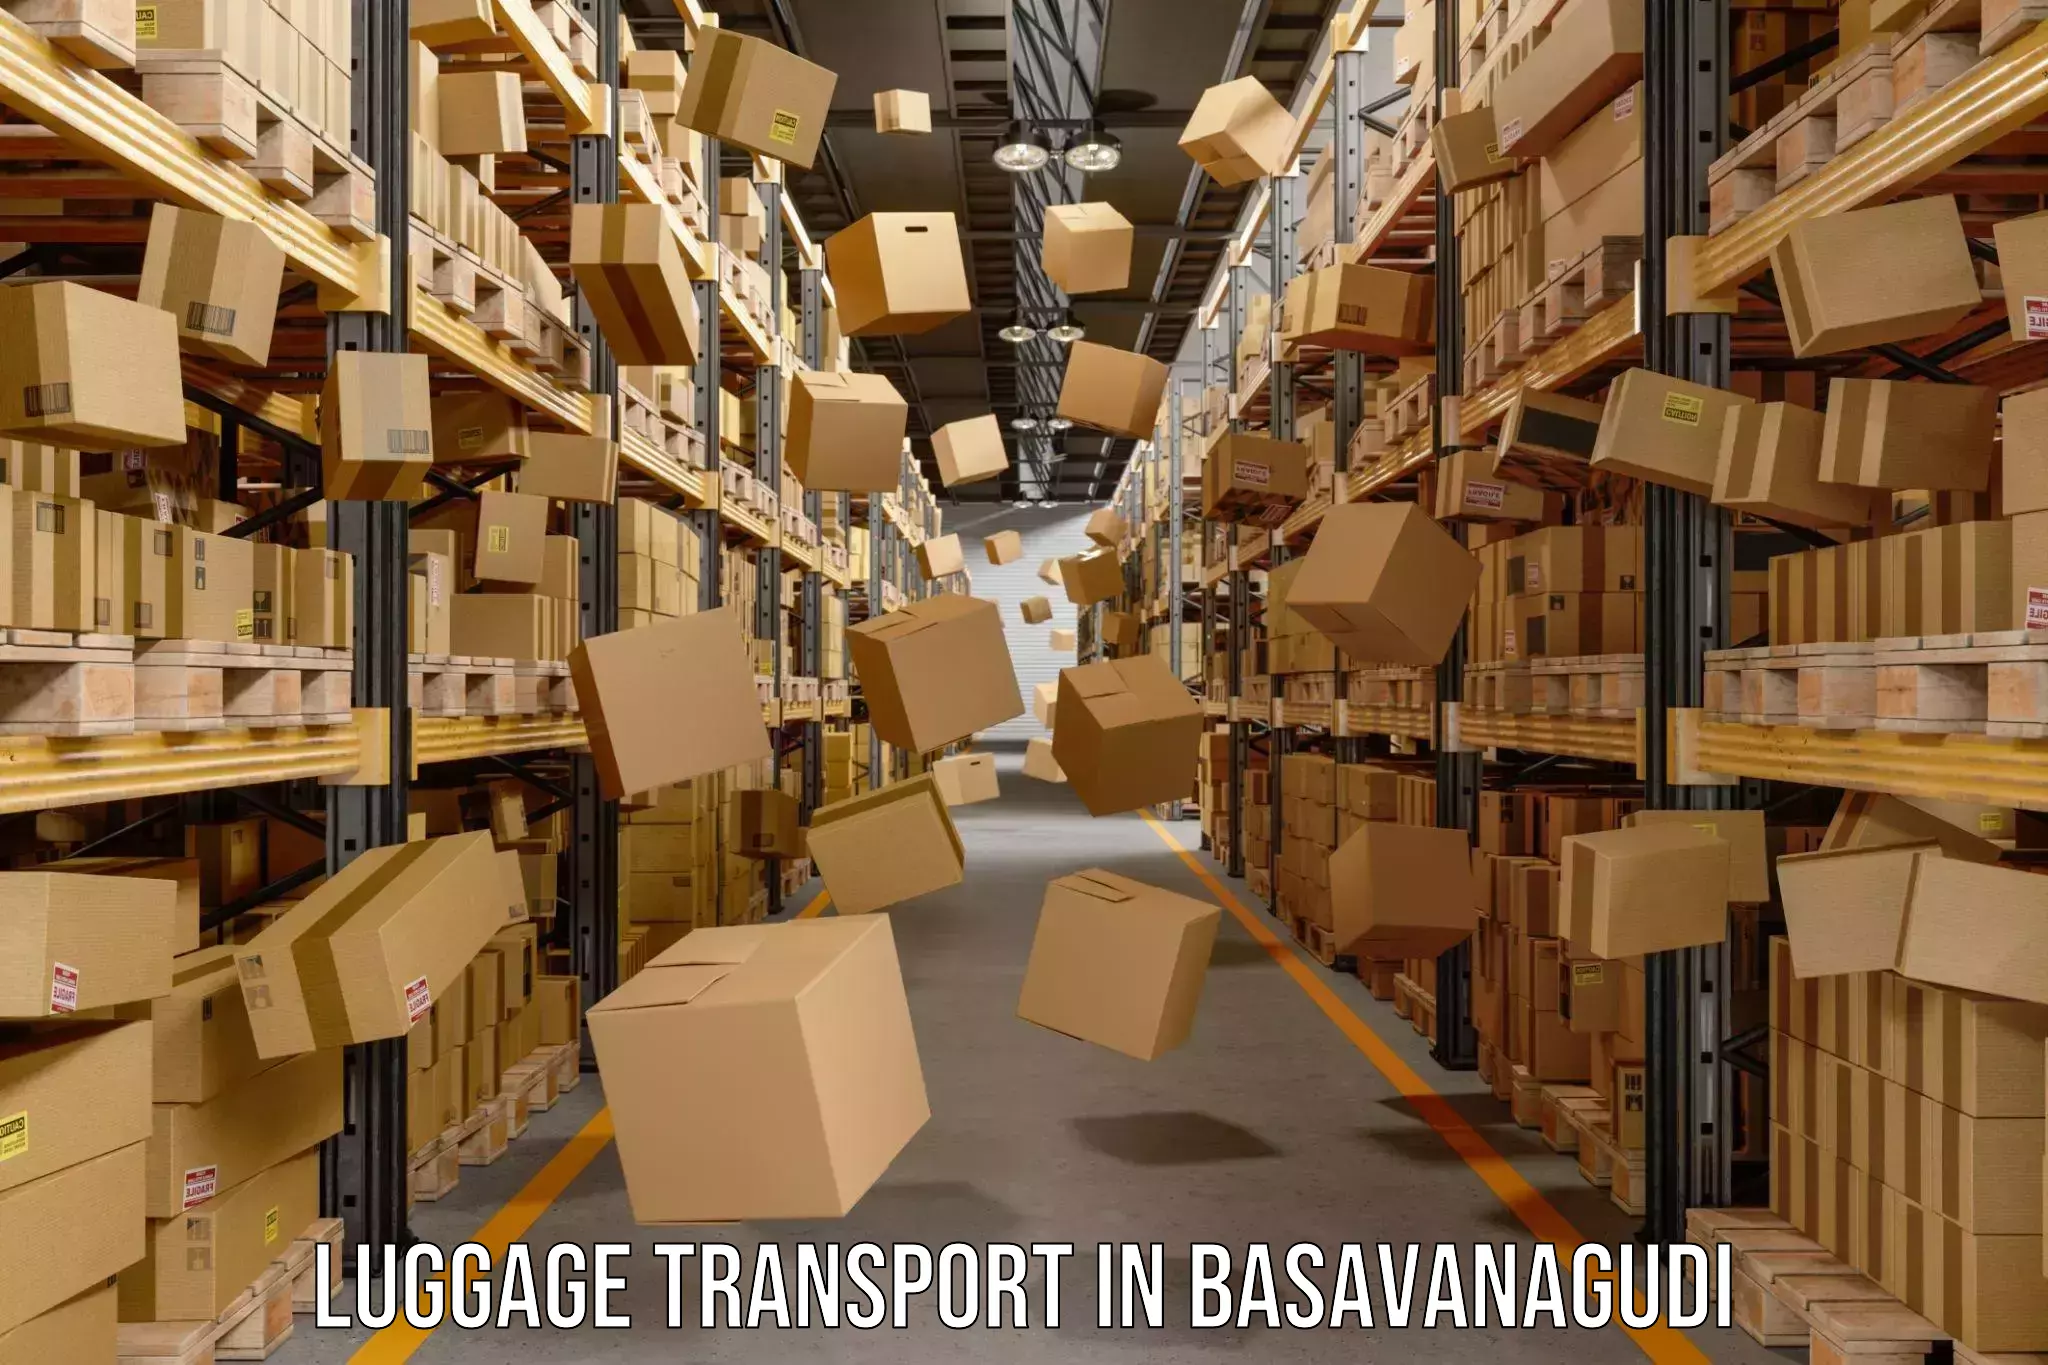 Luggage transport operations in Basavanagudi